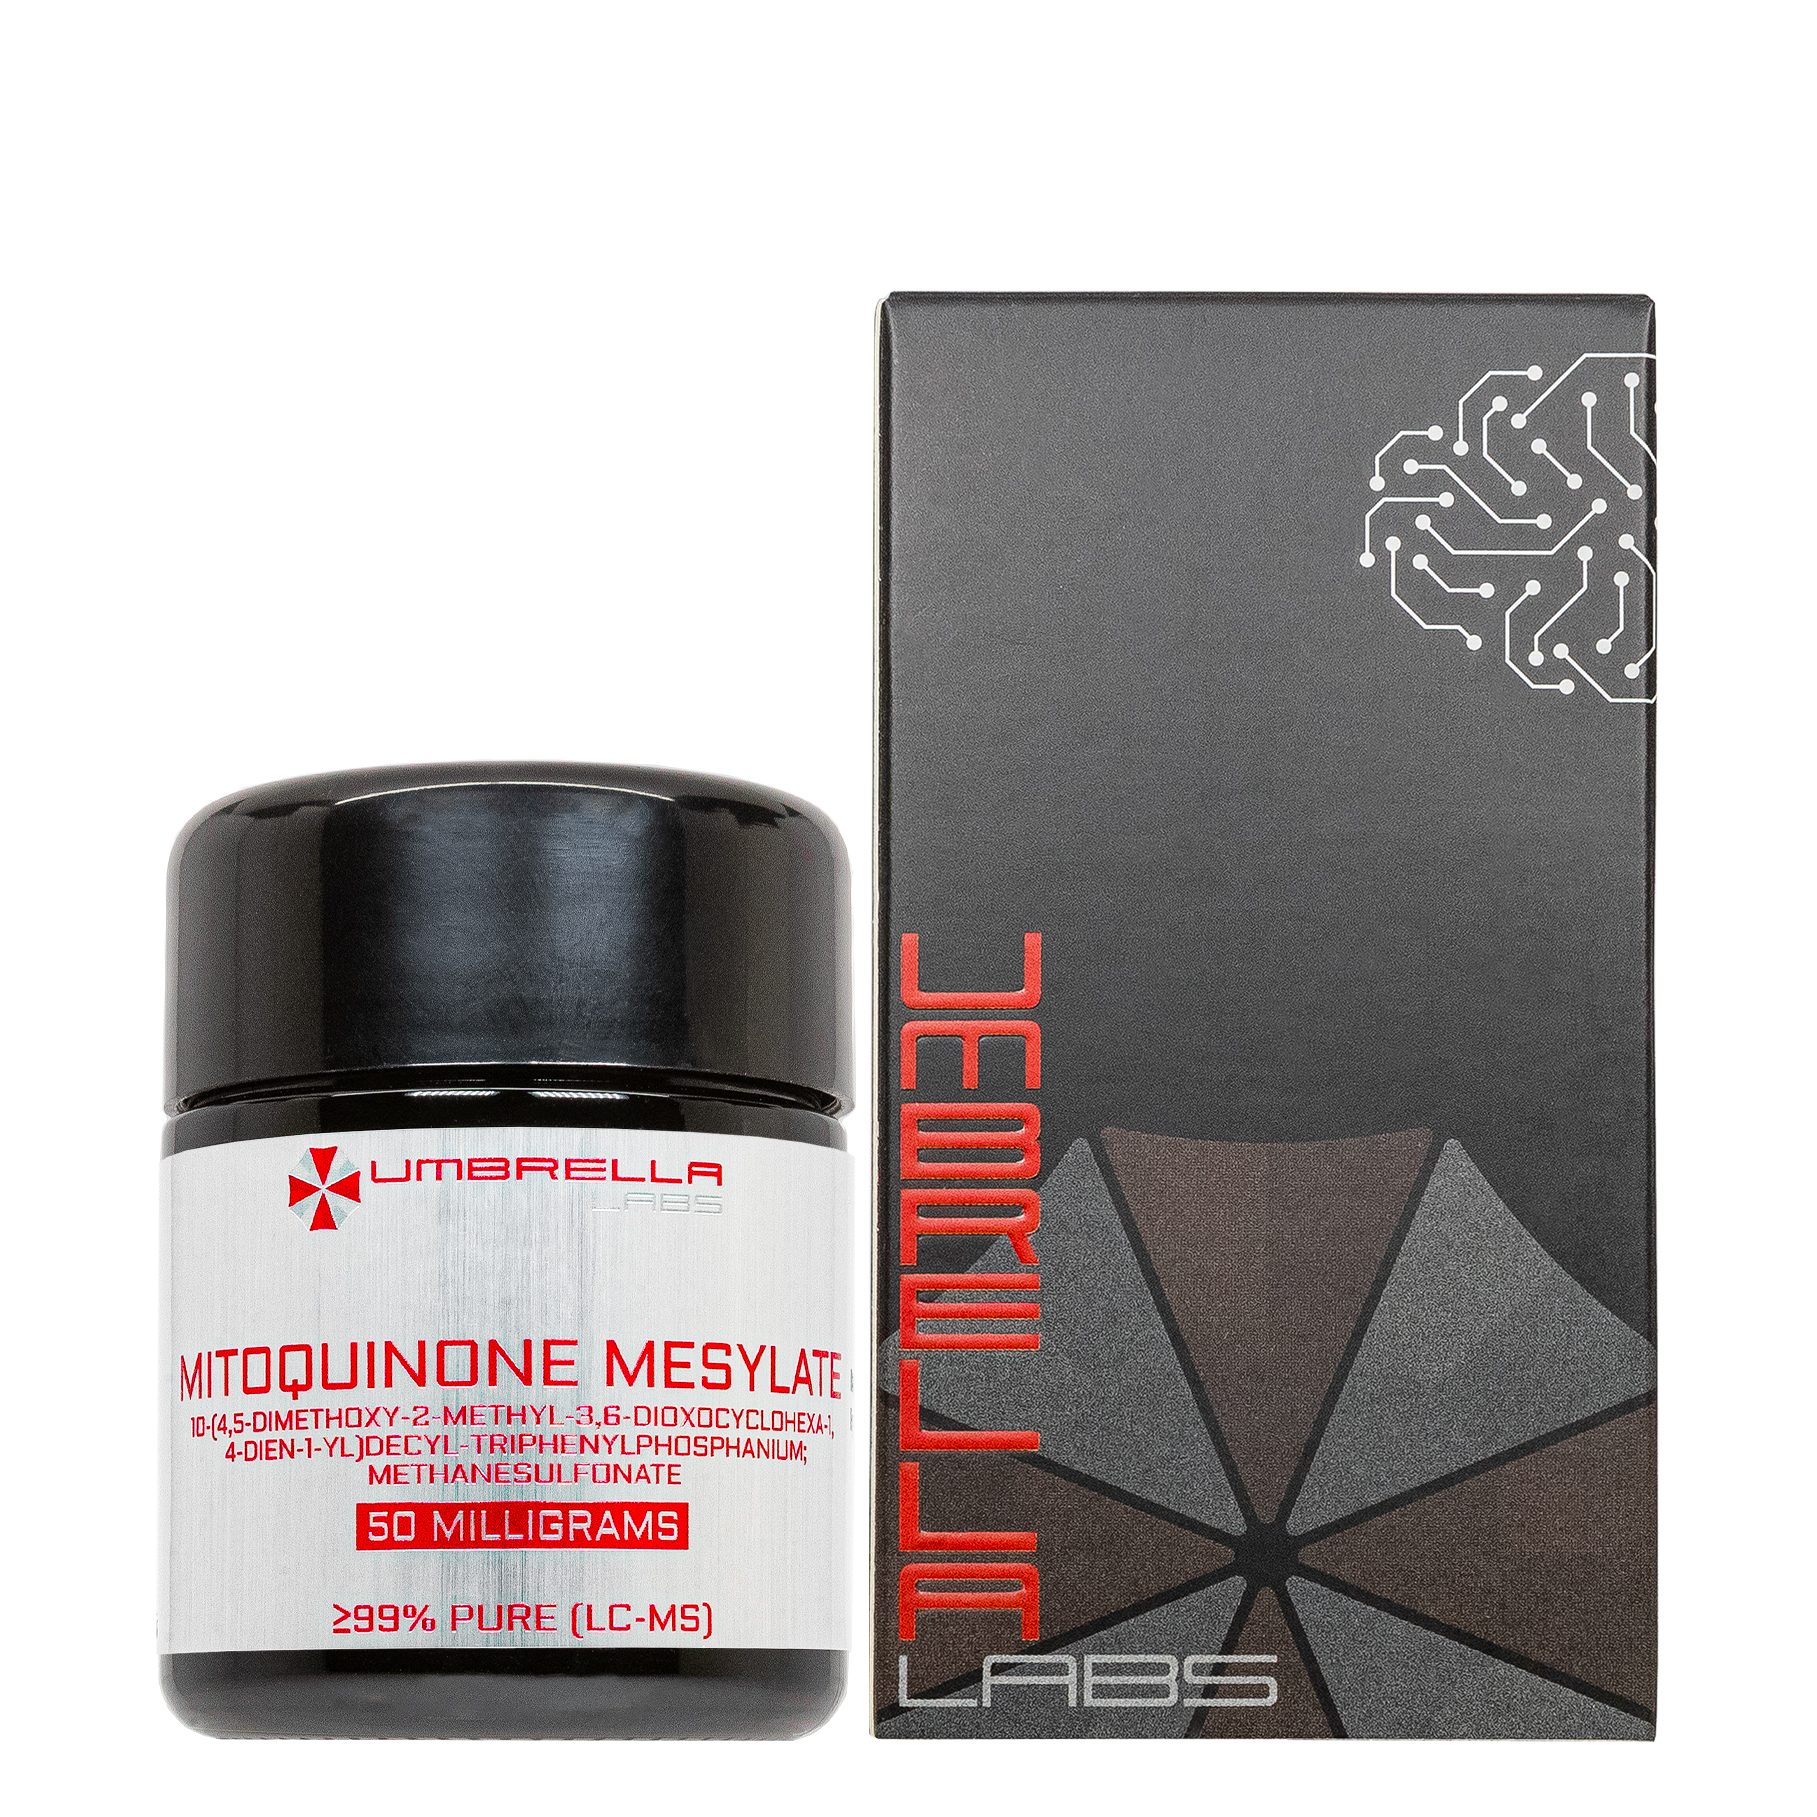 mitoquinone mesylate powder